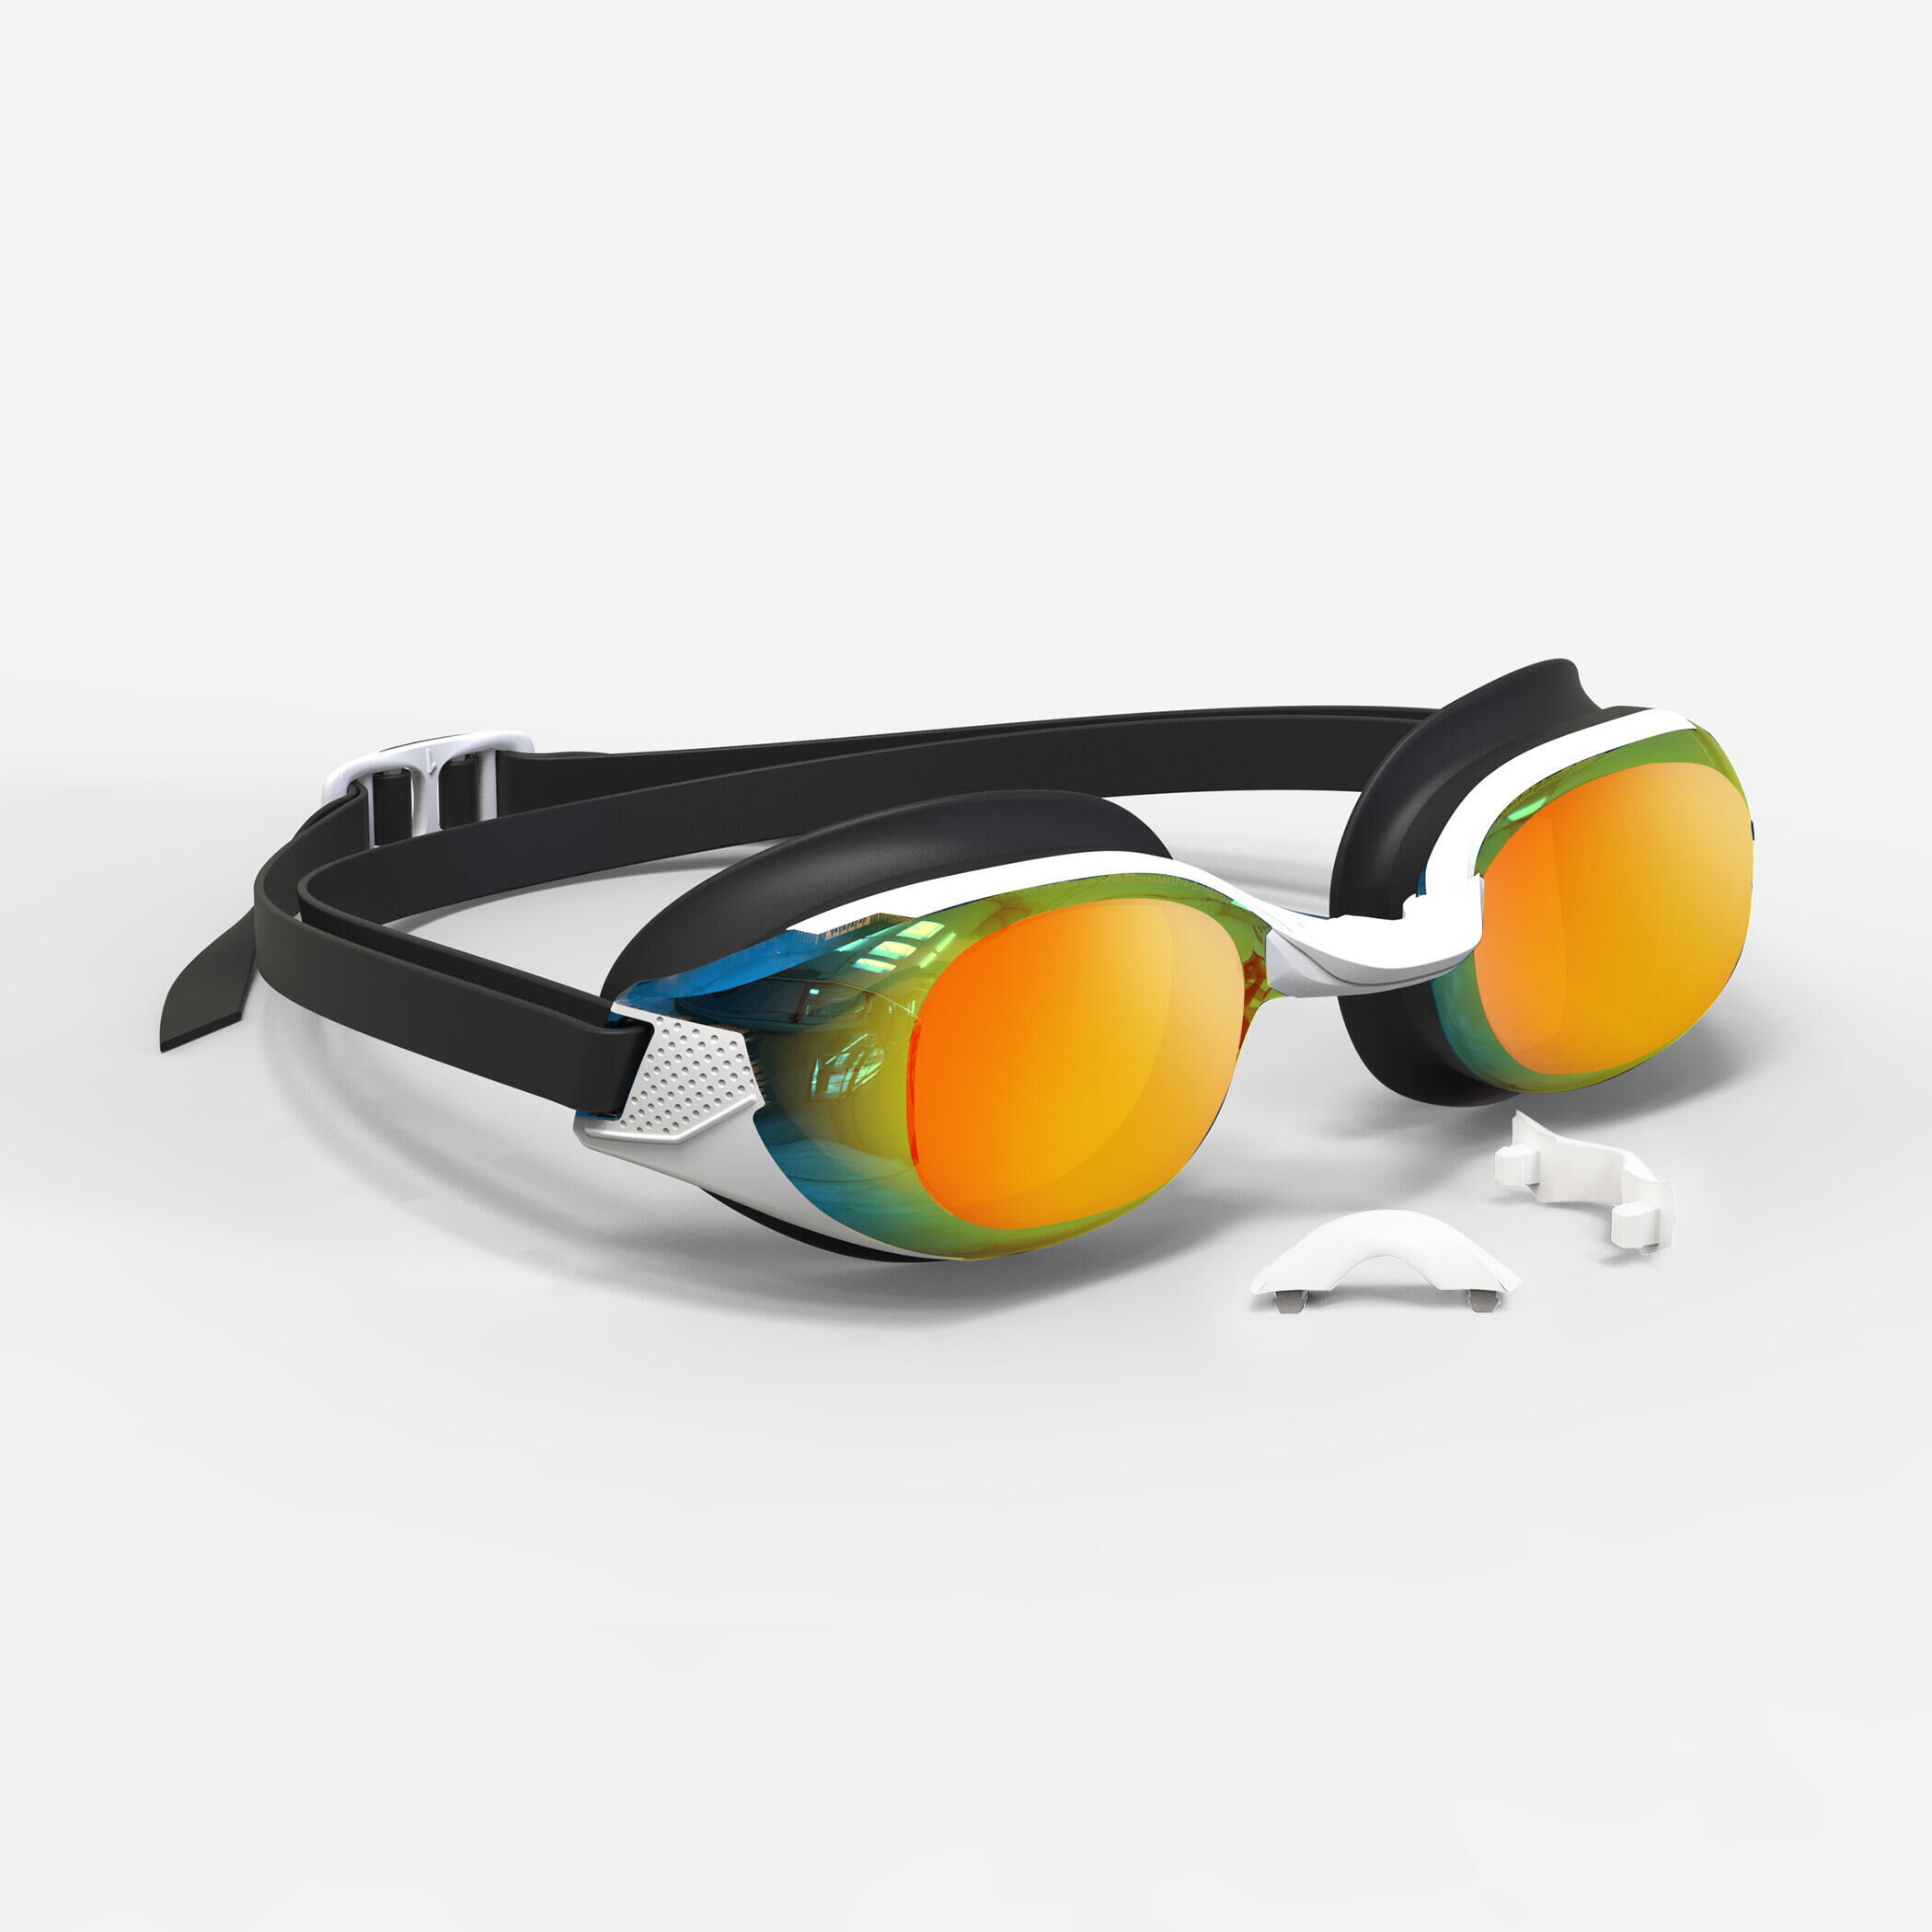 NABAIJI Swimming goggles BFIT - Mirrored lenses - One size - Black orange